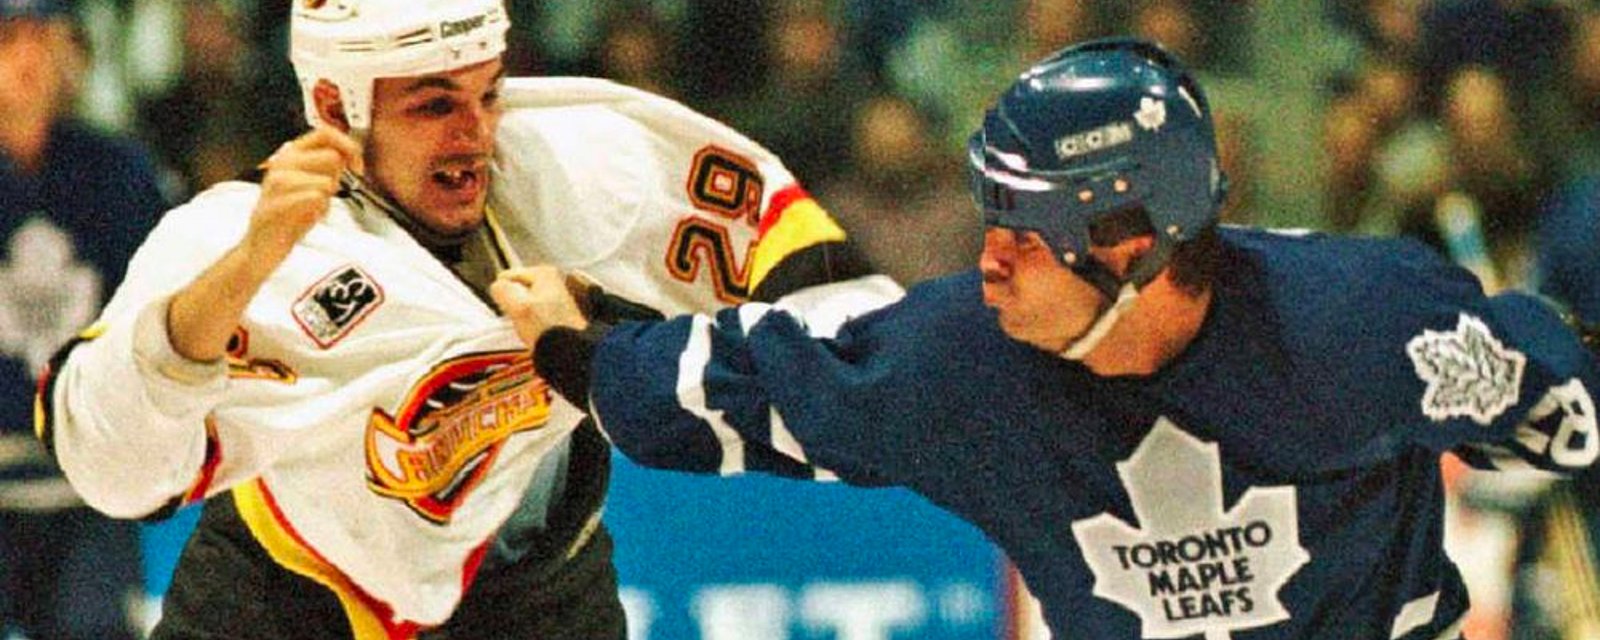 Canucks legend and former NHL tough guy Gino Odjick taken to hospital